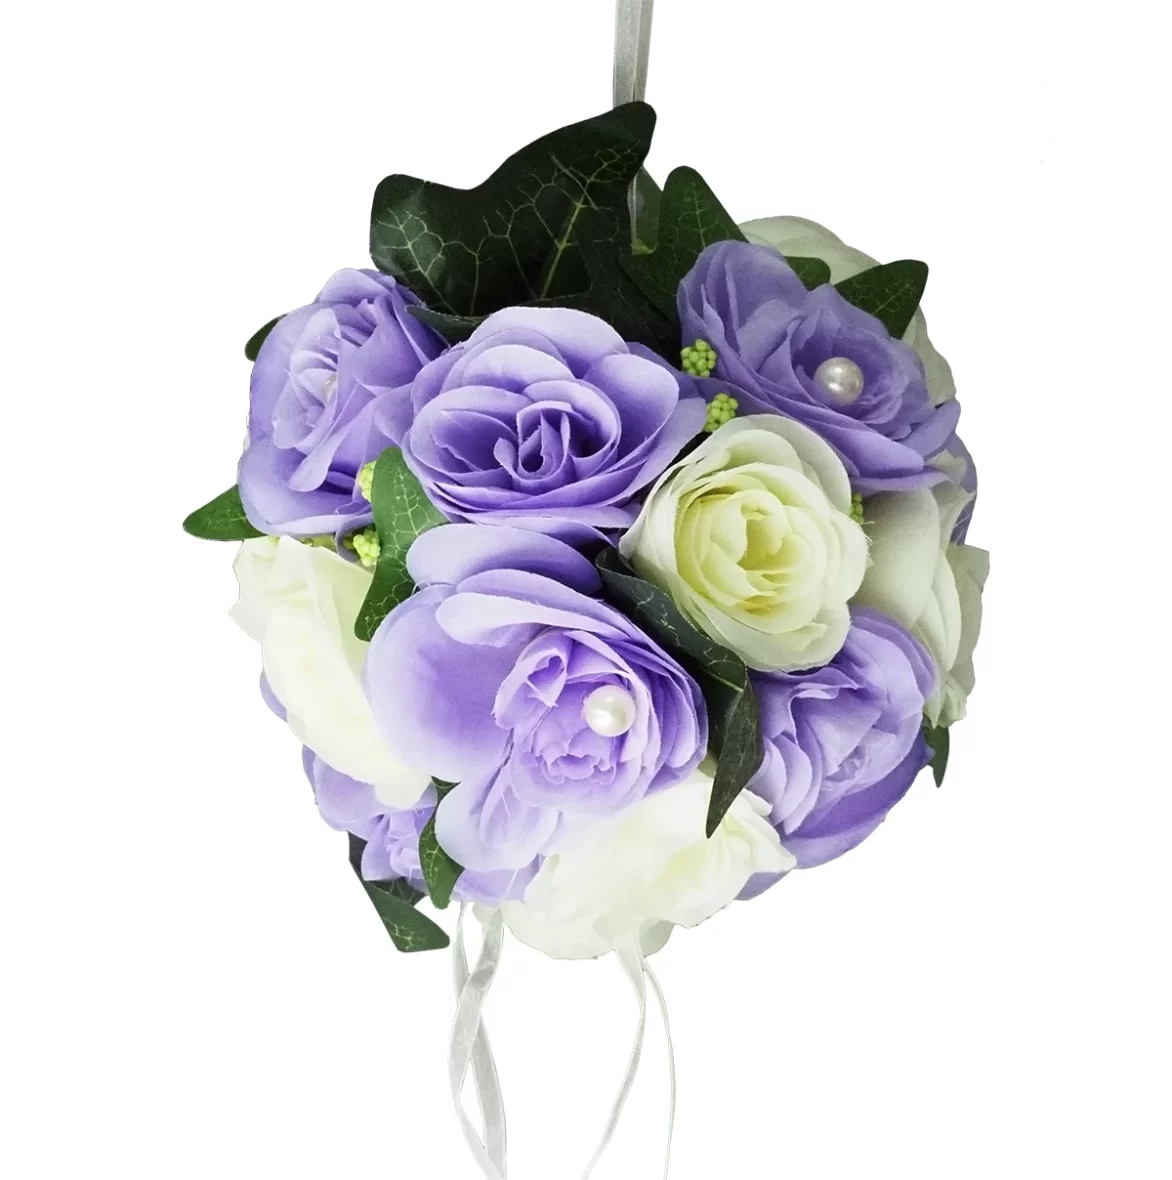 Buchet floral decorativ, culori alb-mov, cu agatatoare